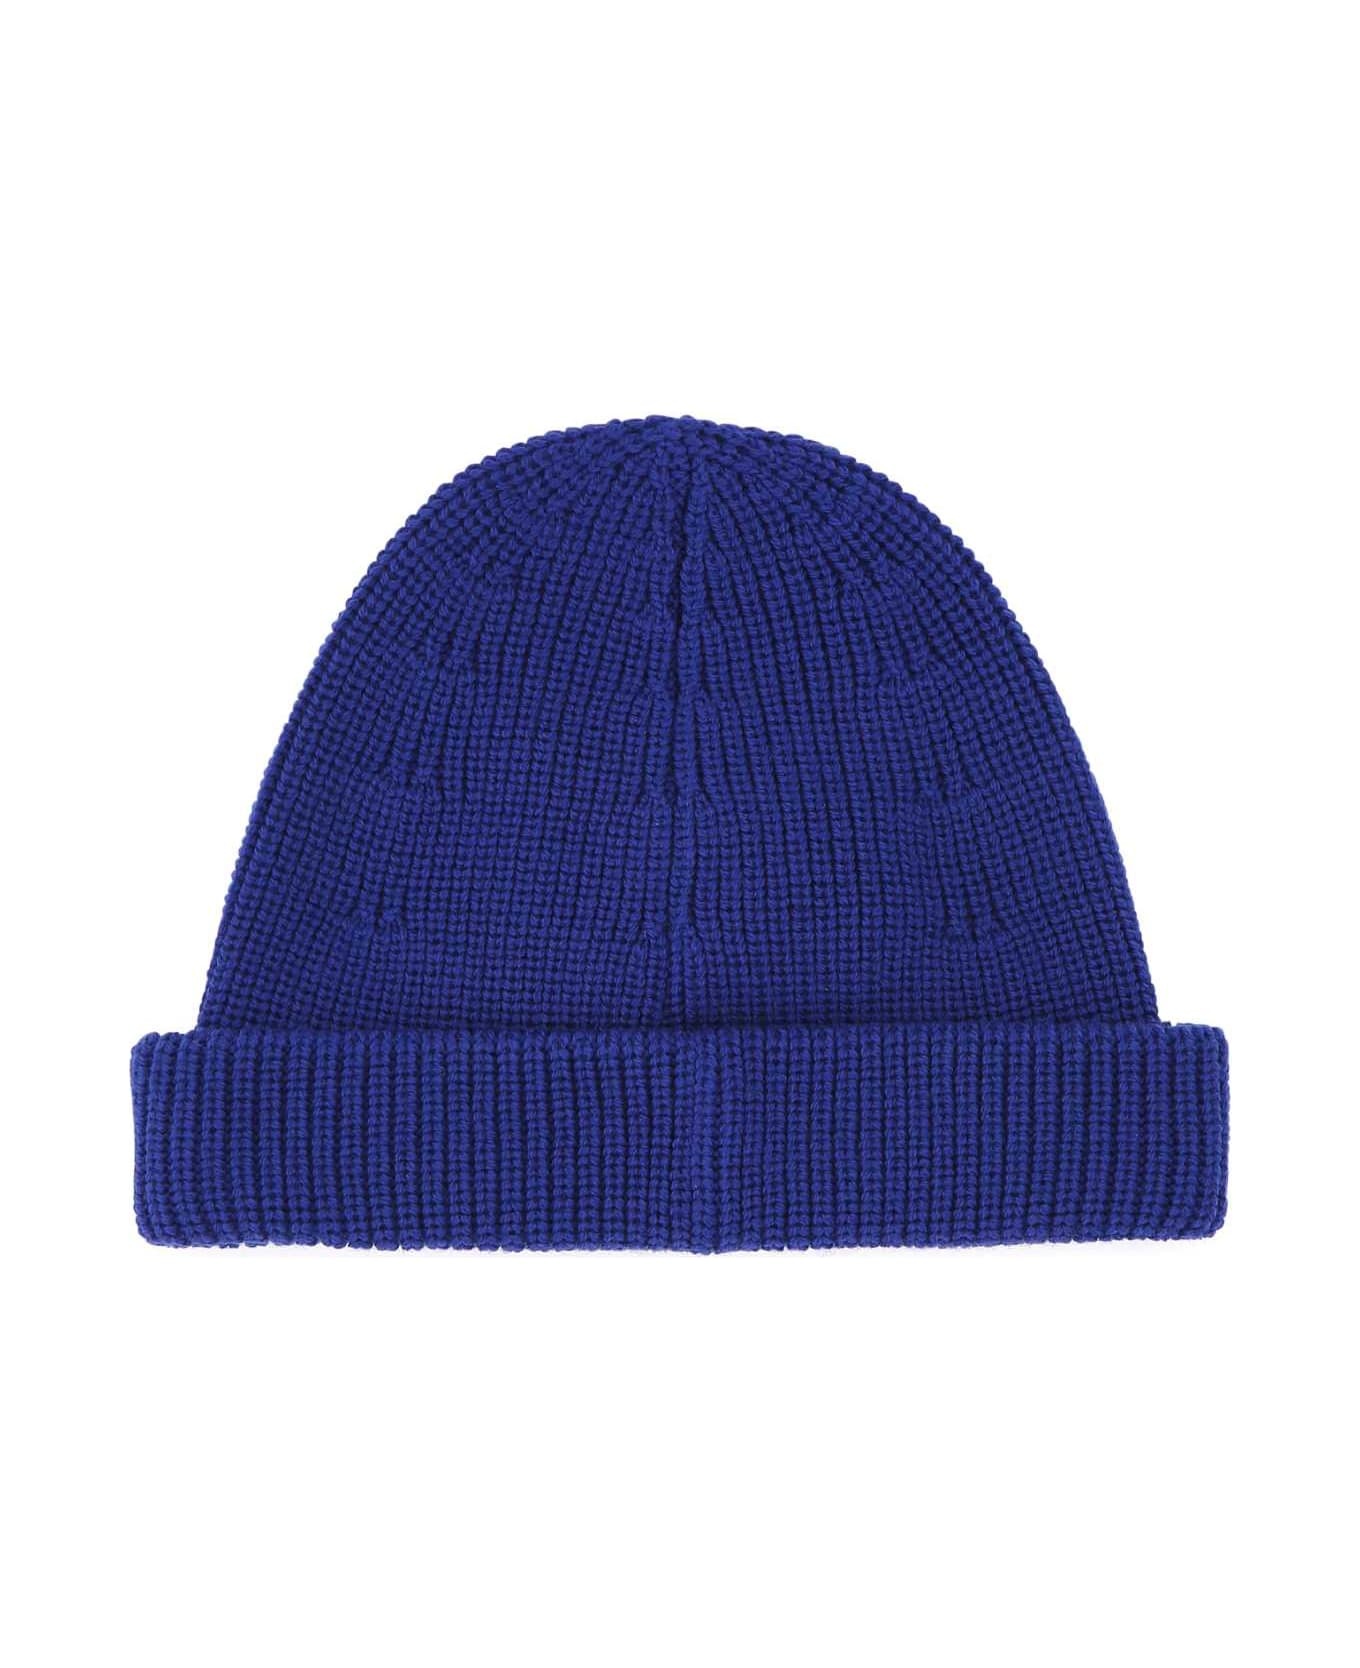 Blue Wool Beanie Hat - 2